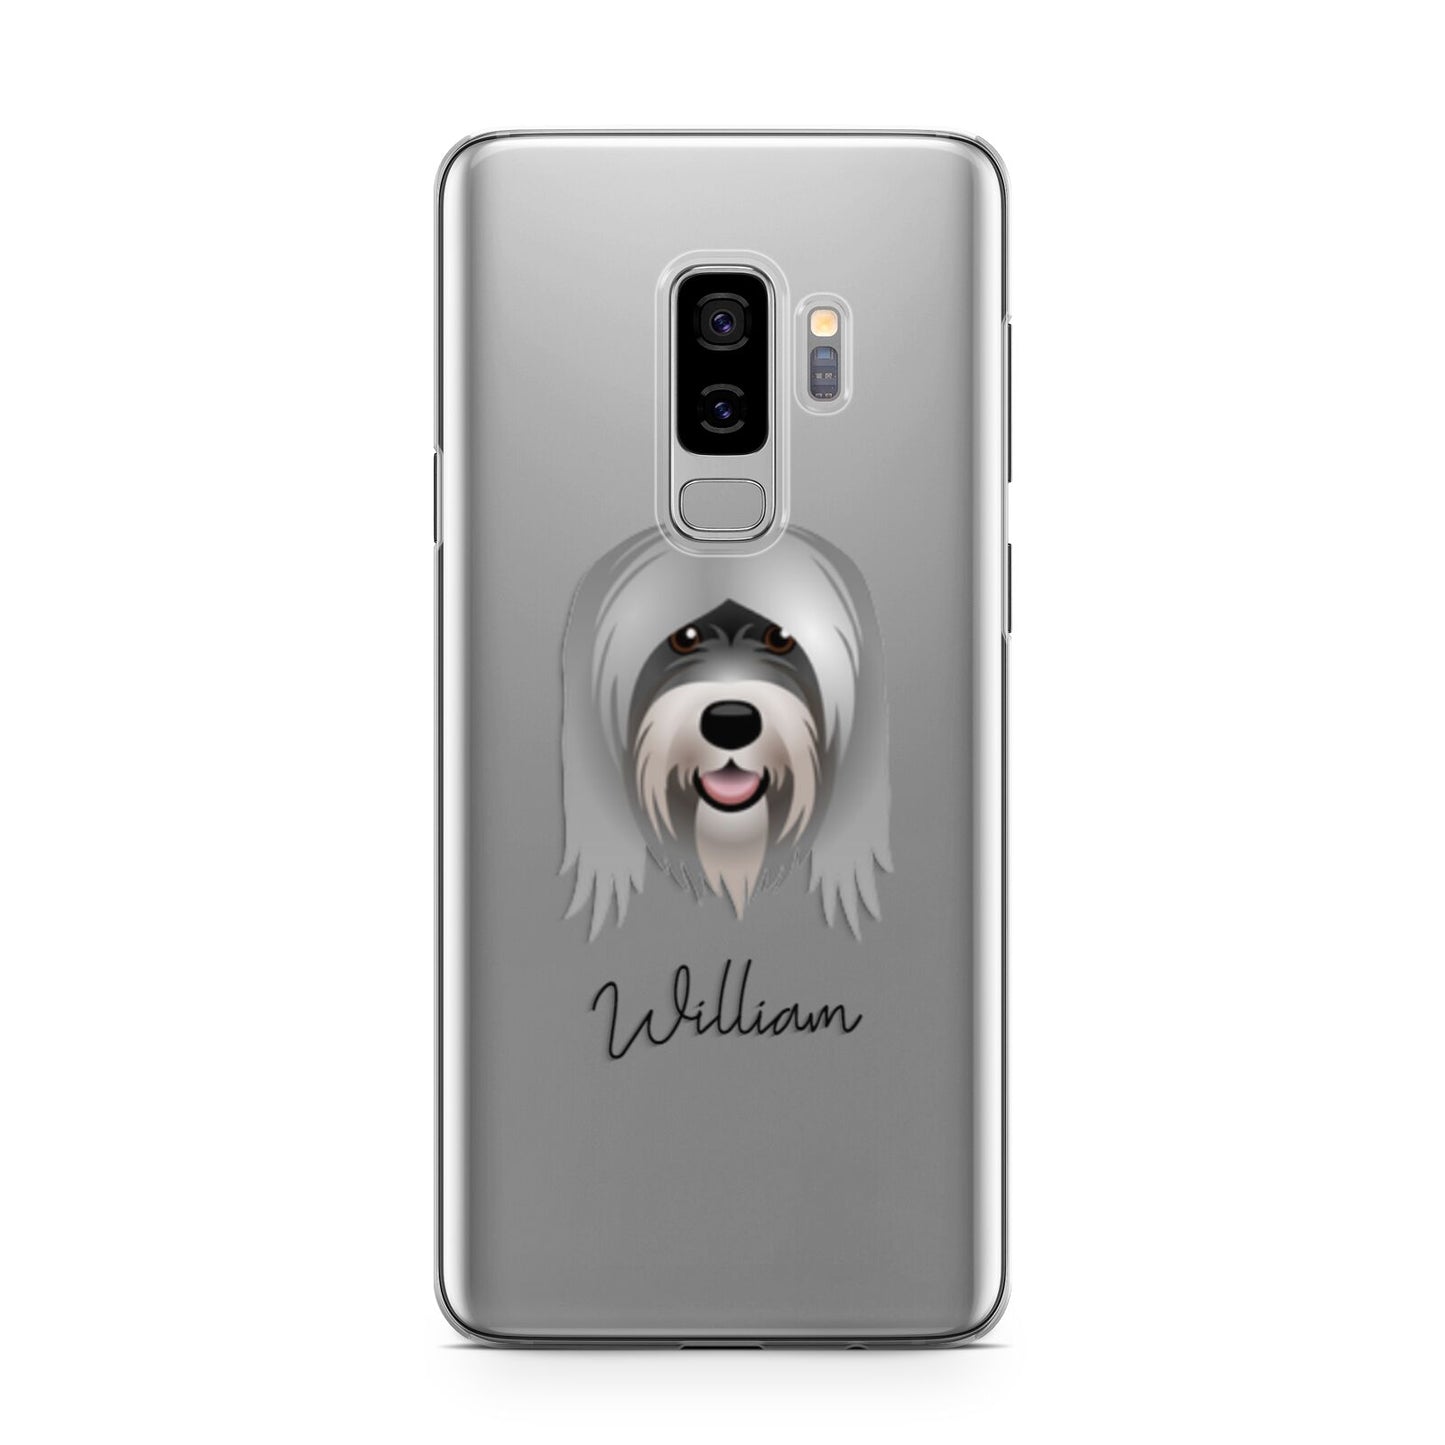 Tibetan Terrier Personalised Samsung Galaxy S9 Plus Case on Silver phone